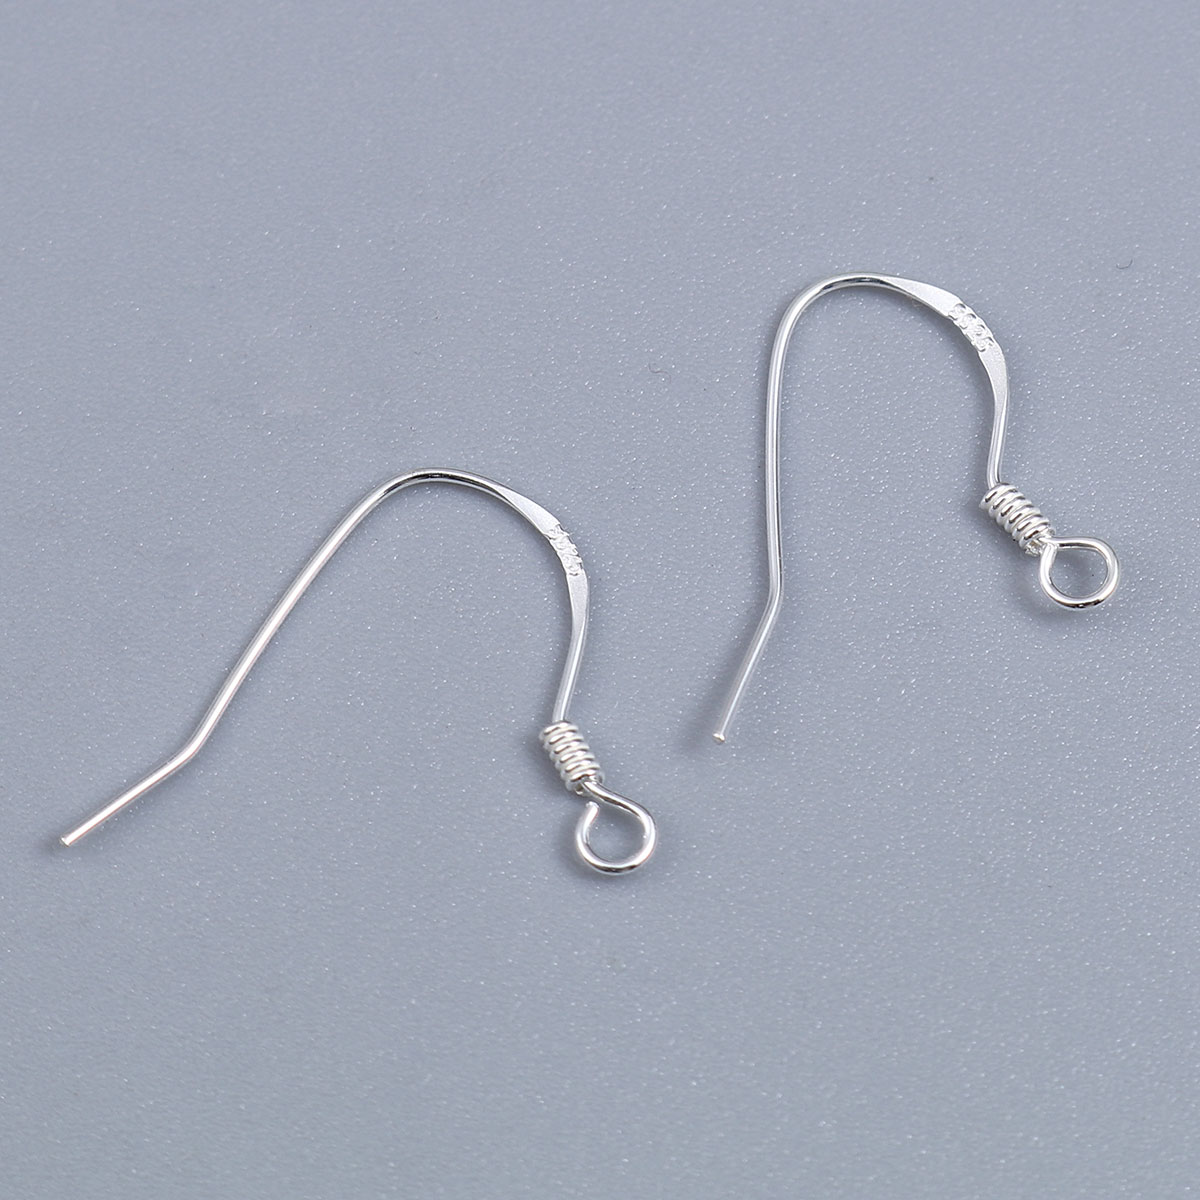 Picture of Sterling Silver Ear Wire Hooks Earring Findings Silver 15mm( 5/8") x 14mm( 4/8"), Post/ Wire Size: (24 gauge), 10 PCs